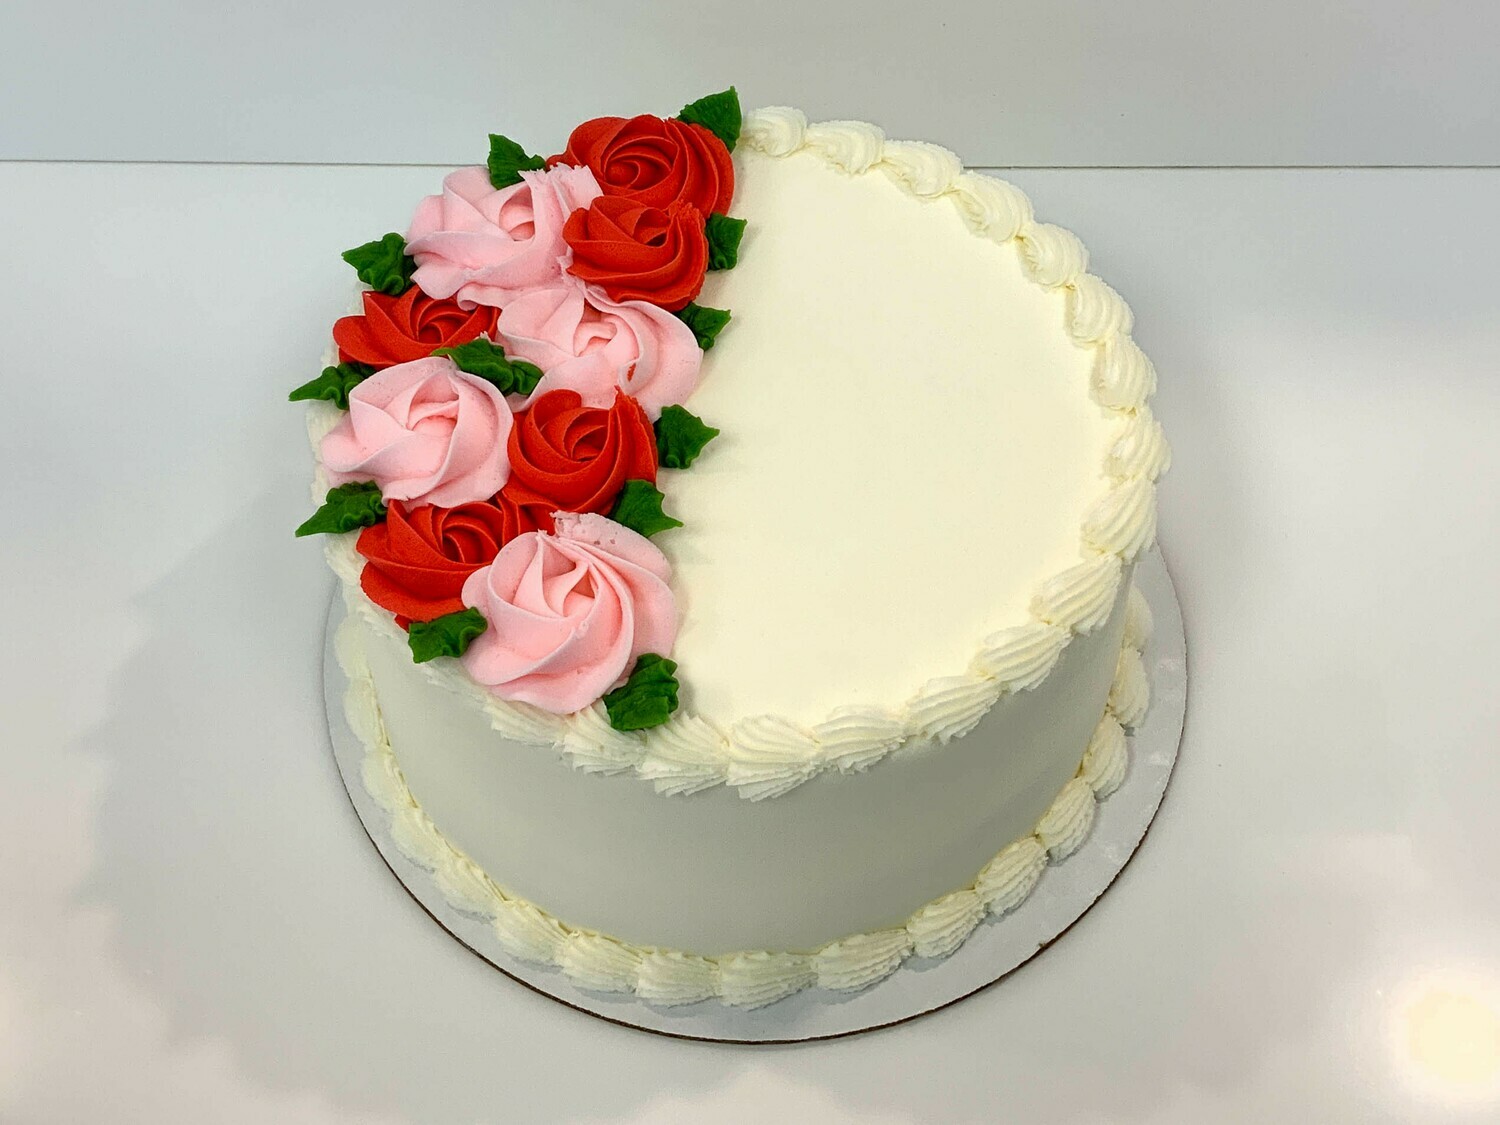 Rosette Spray Decorated Cake